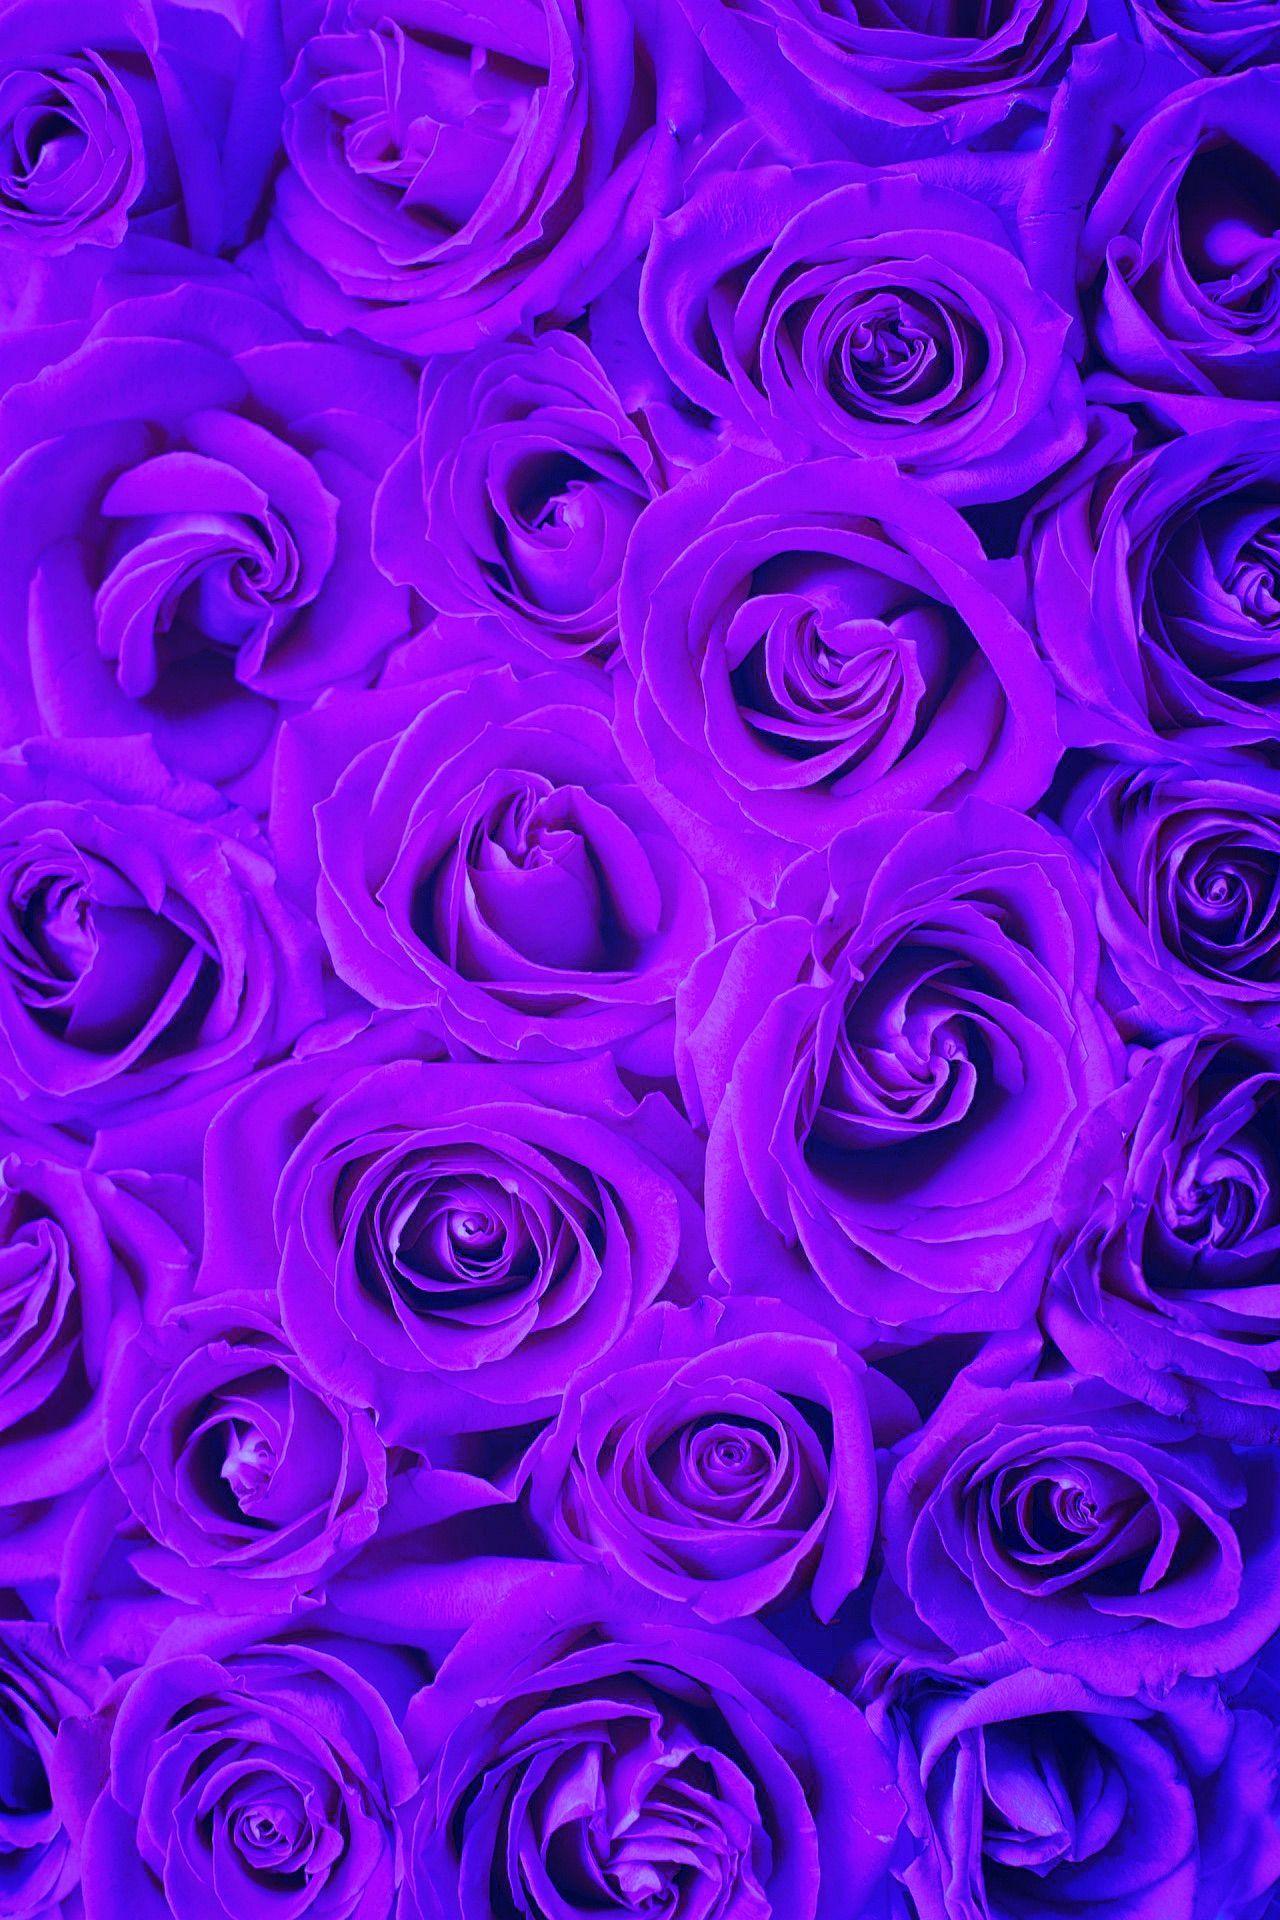 Lavender Rose Wallpapers - Top Free Lavender Rose Backgrounds ...